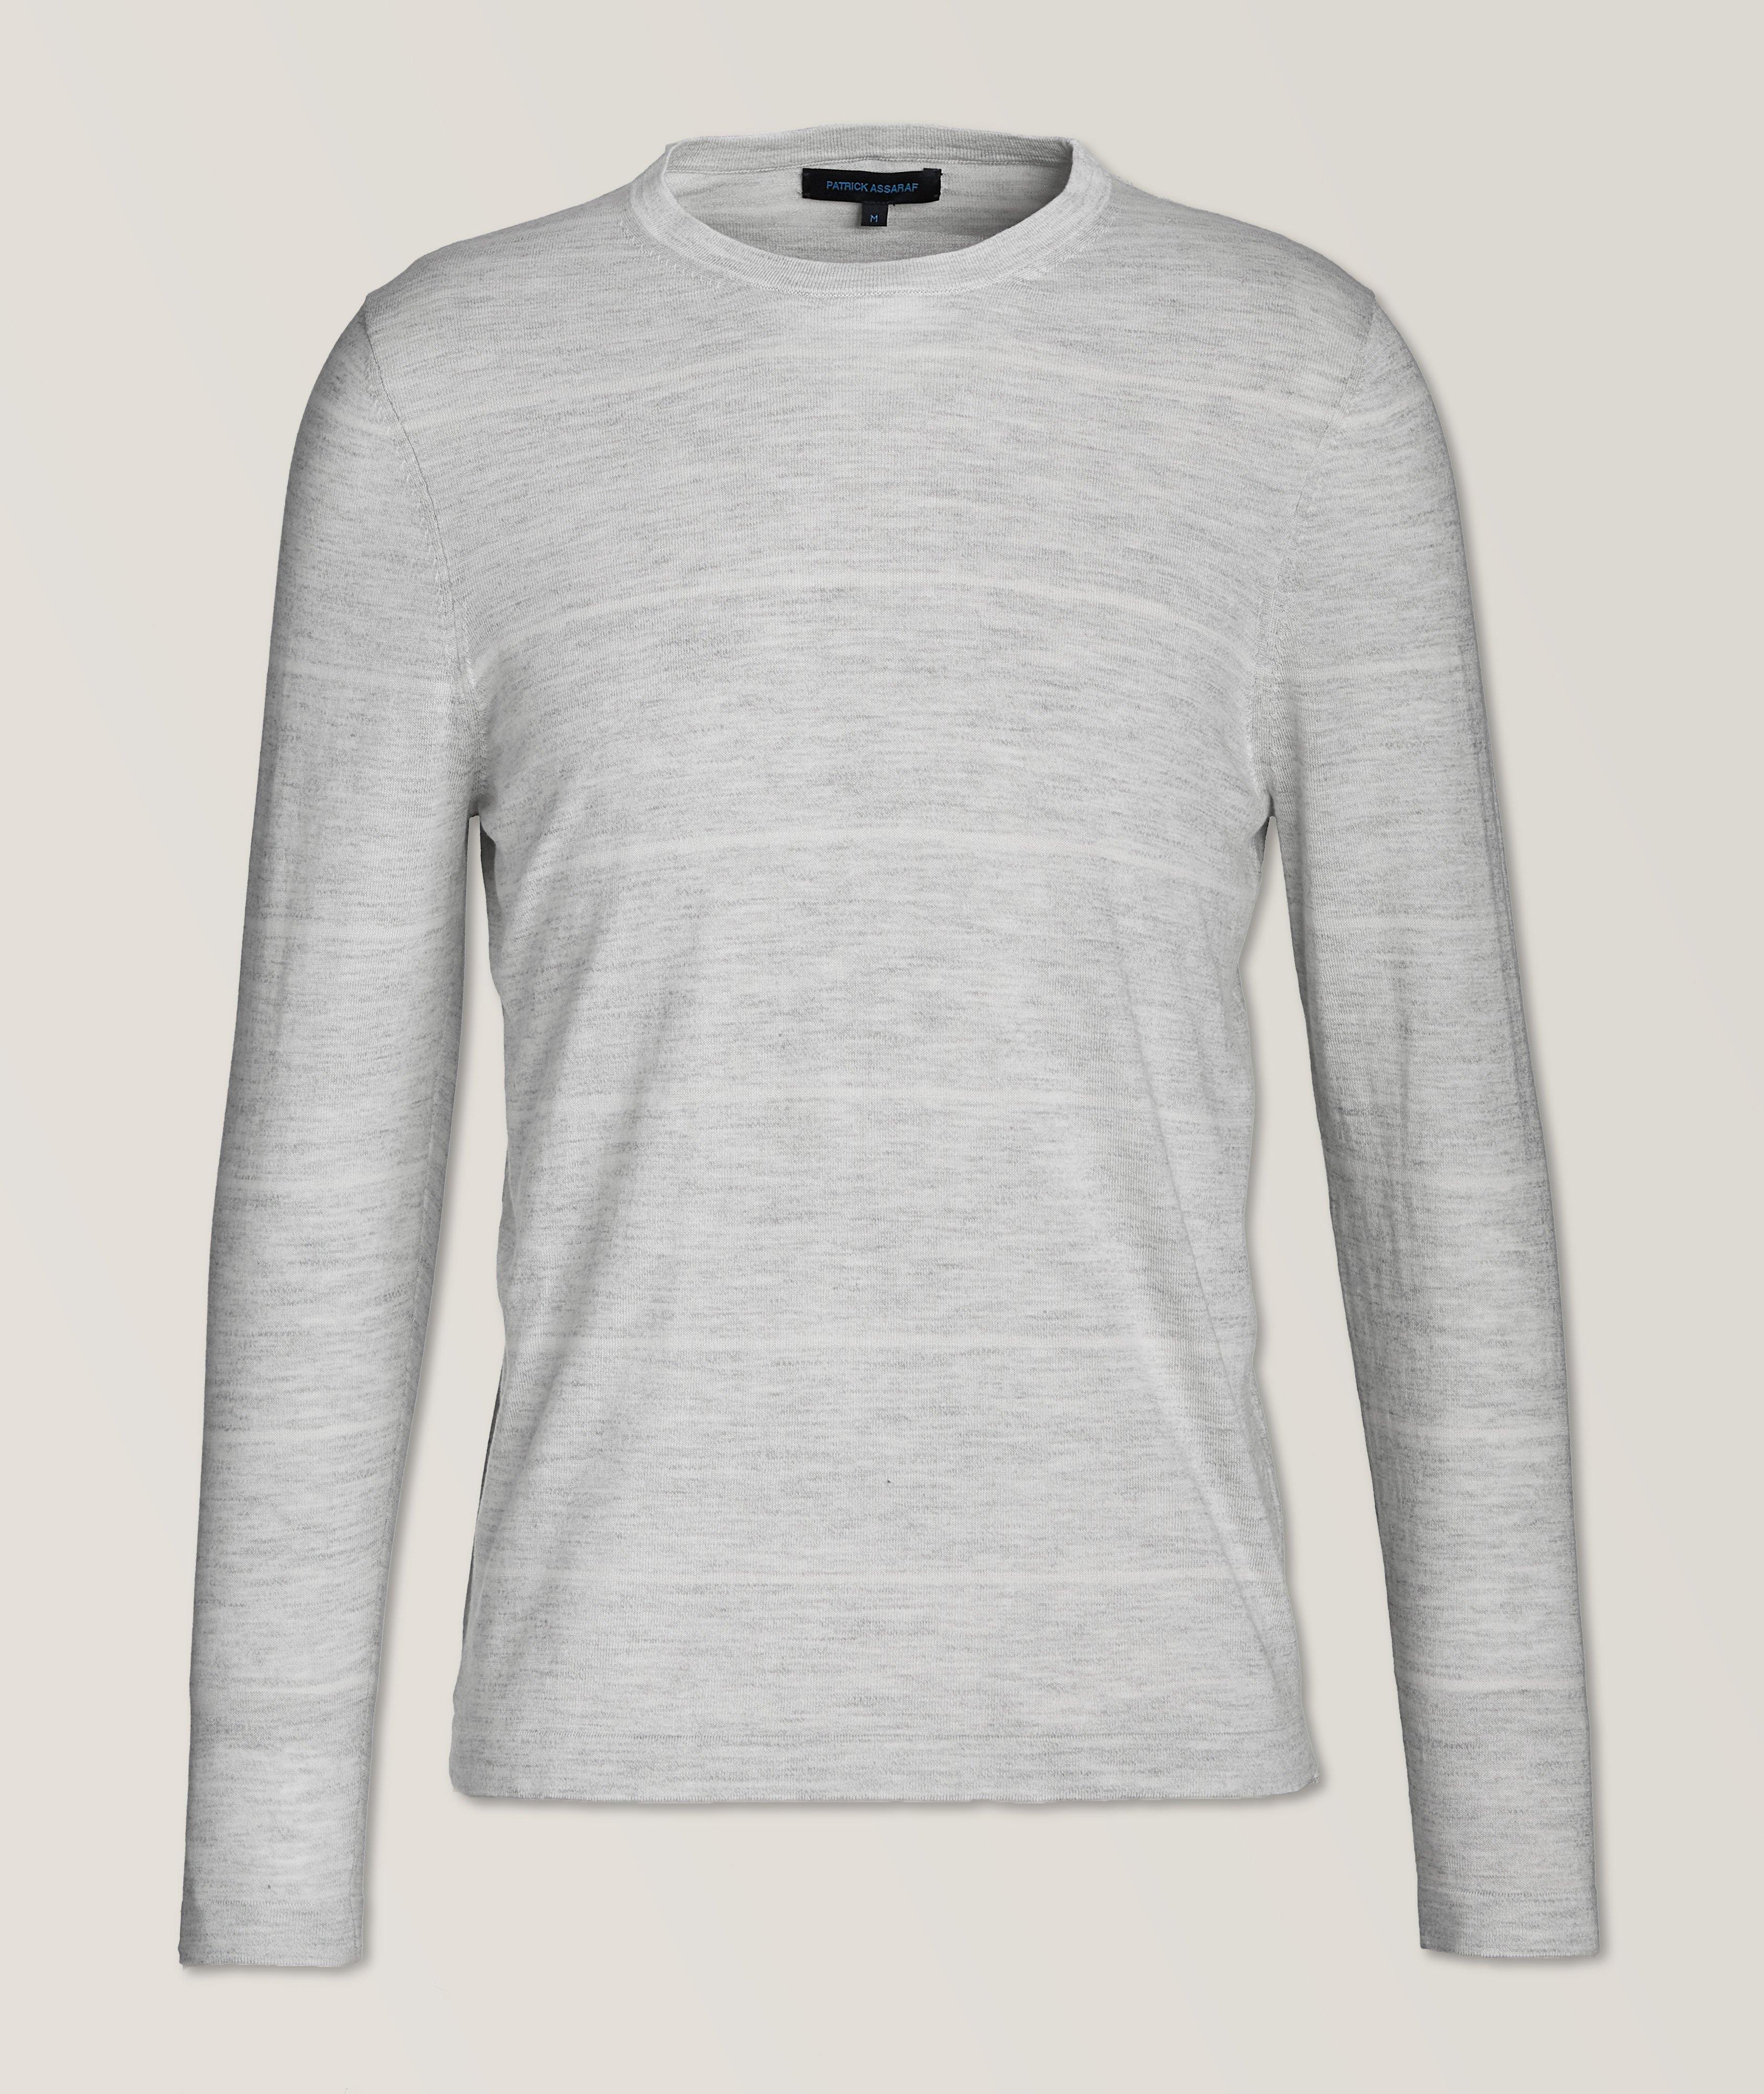 Vintage Wash Cotton-Blend Sweatshirt image 0